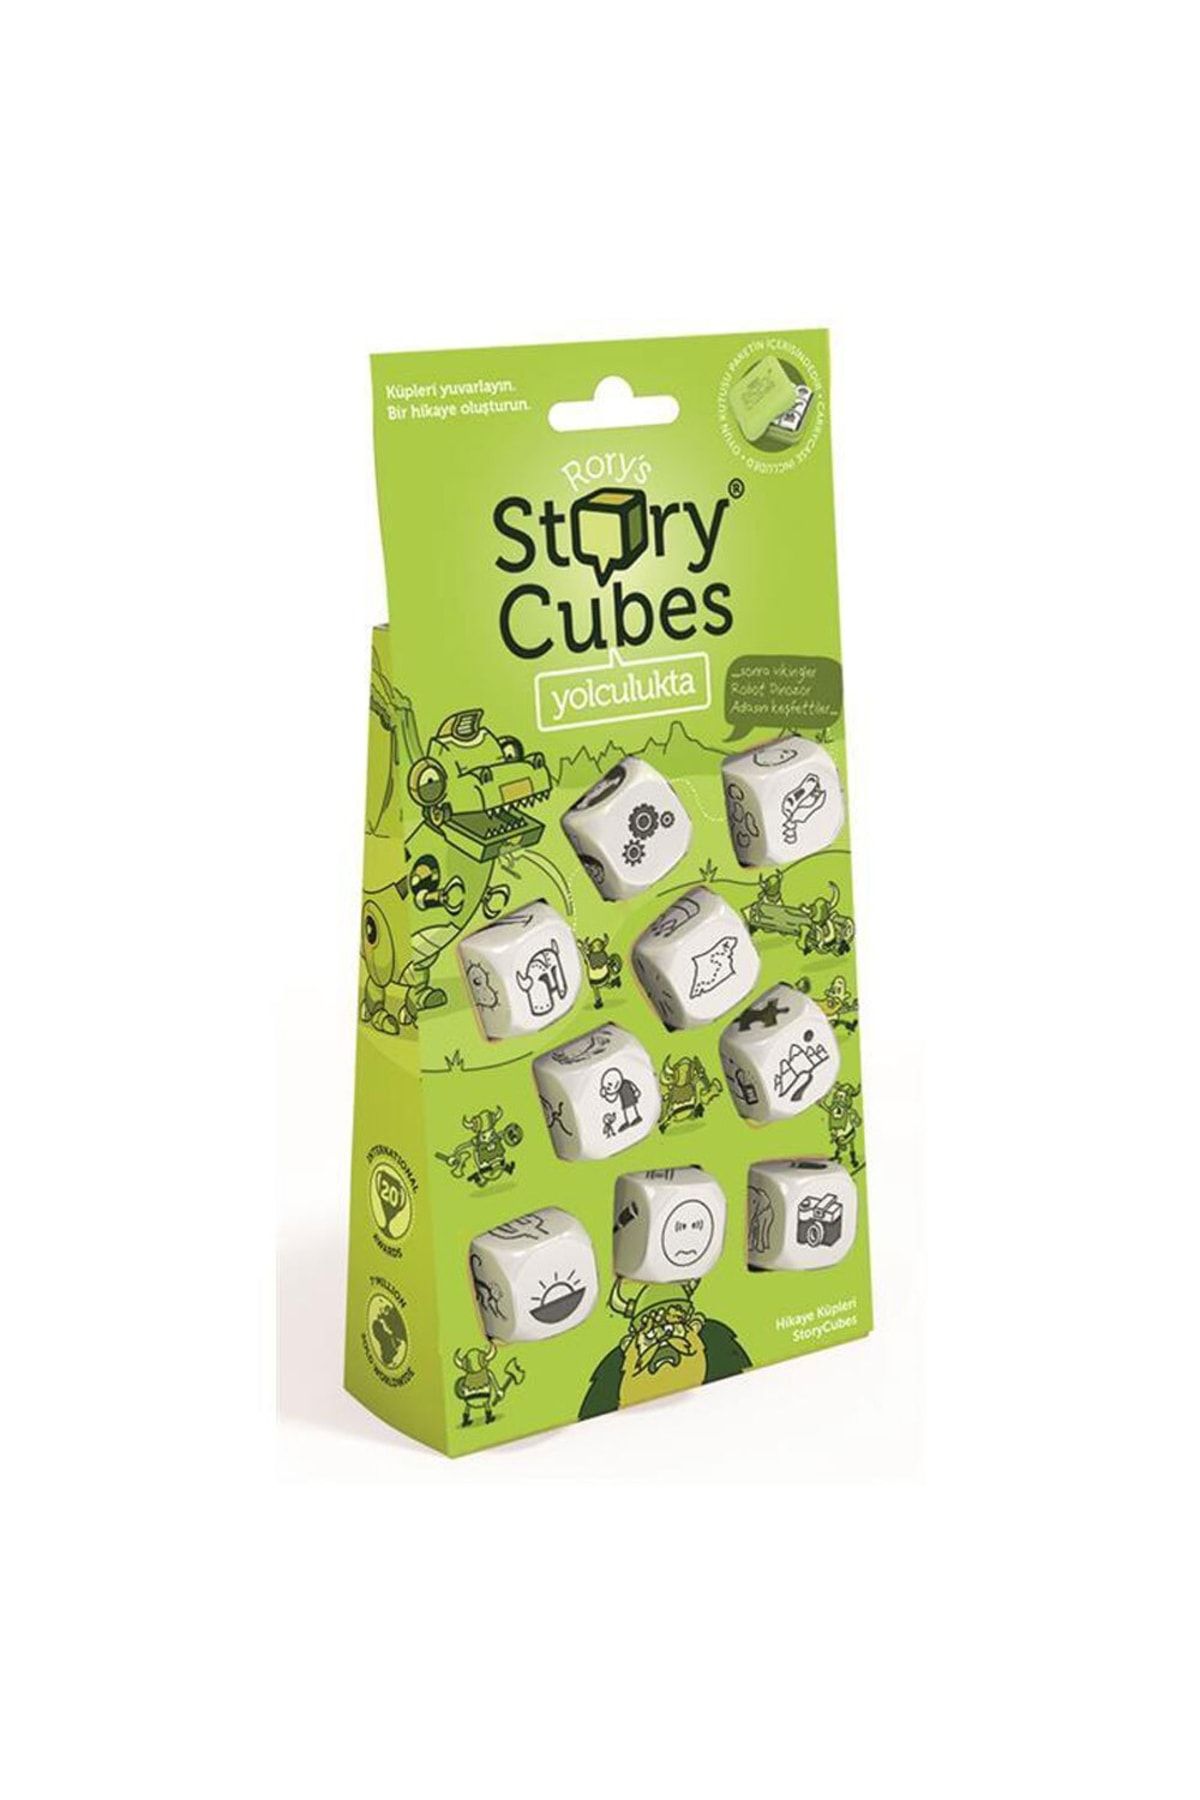 The Creativiy Hub Rory'nin Hikaye Küpleri - Yolculukta - Hediyelik (rory's Story Cubes - Voyages)